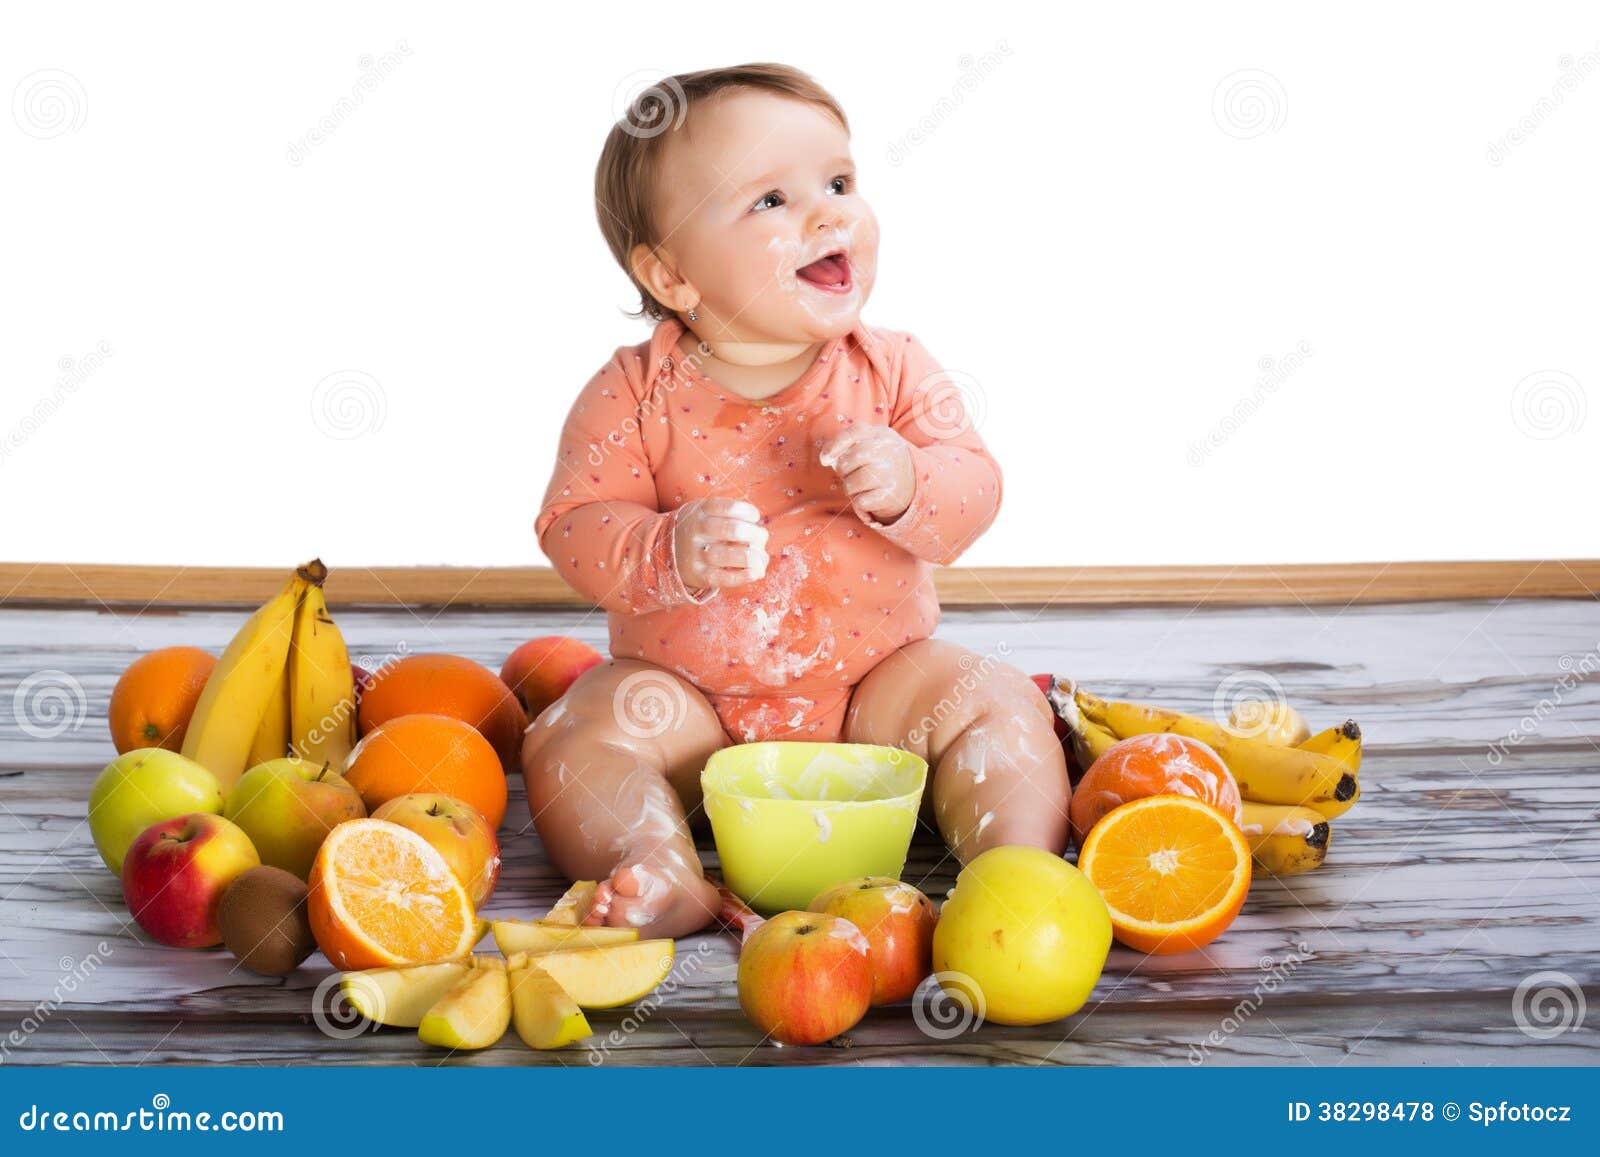 Smiling baby and fruits stock photo. Image of fruit, childhood ...